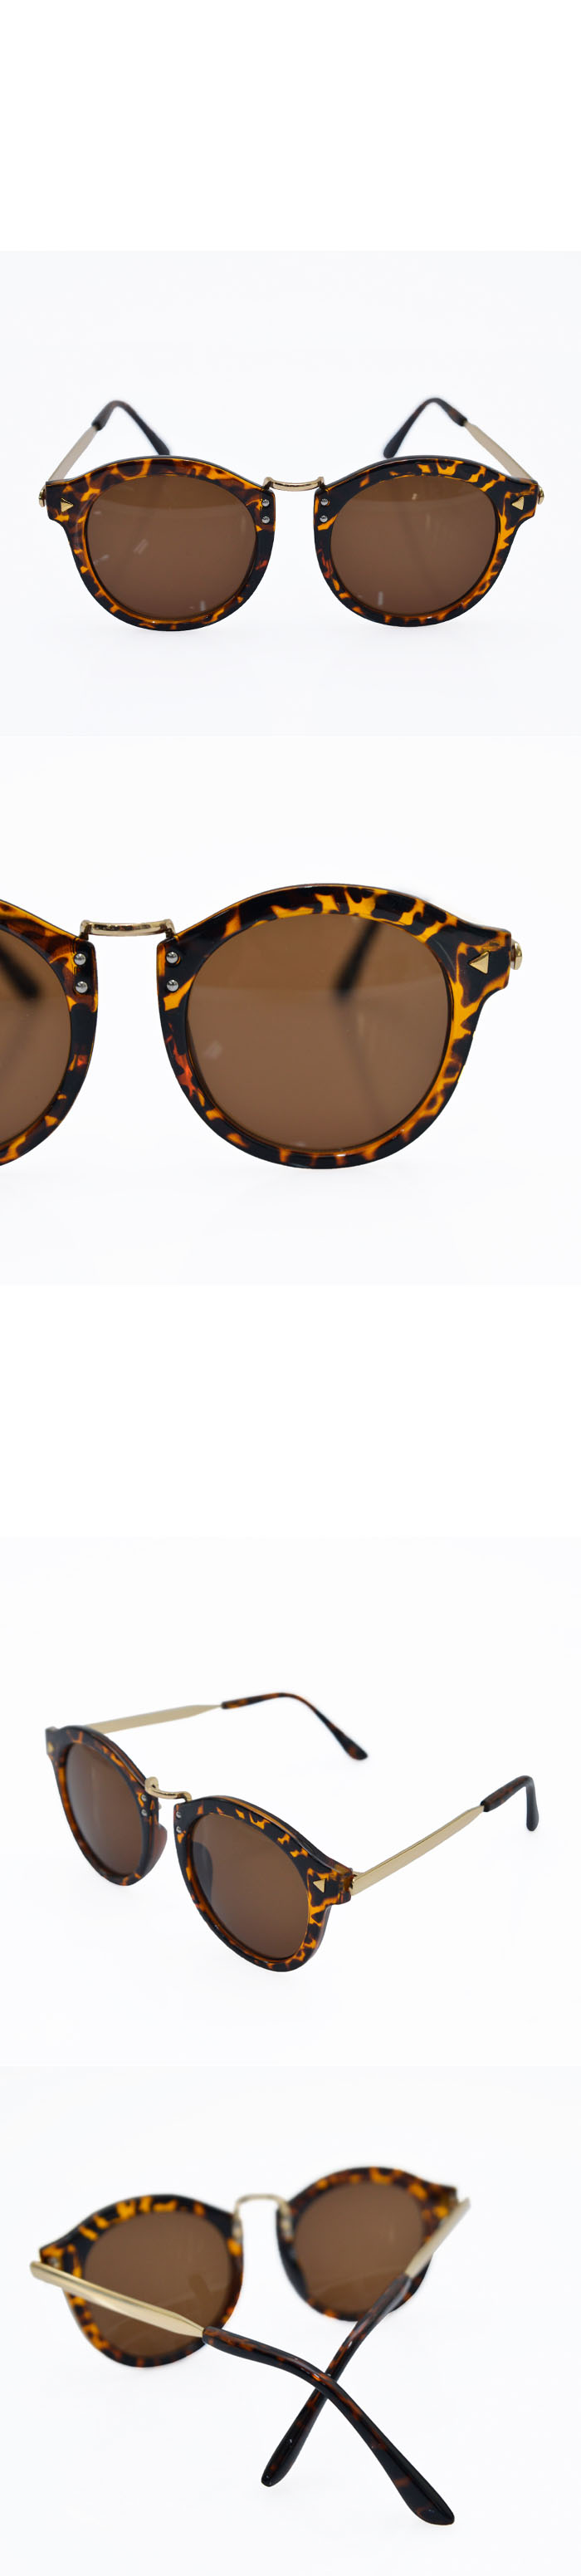 Accessories :: Sunglasses & Glasses :: Euro Chic Teardrop Gold Rivet ...